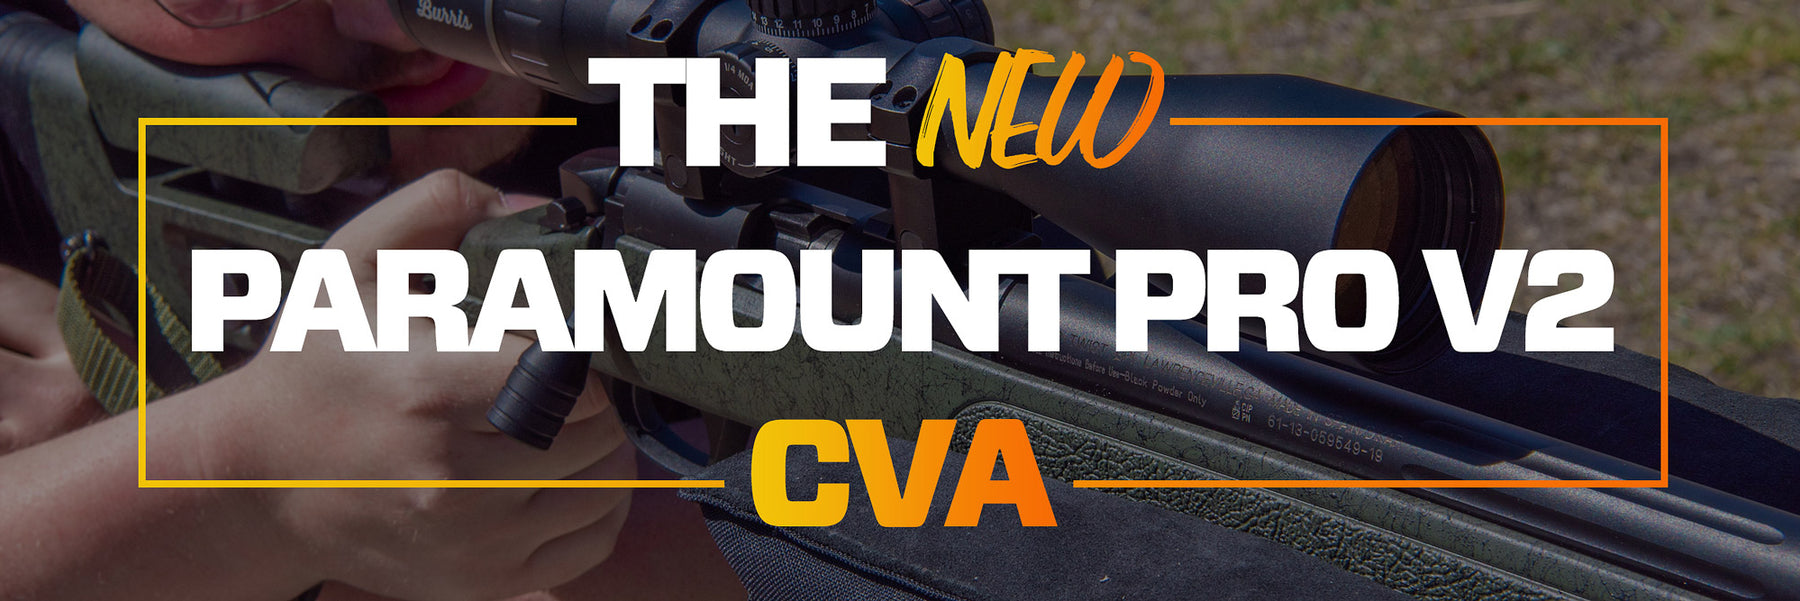 CVA Paramount Pro V2 Muzzleloader Rifle Review